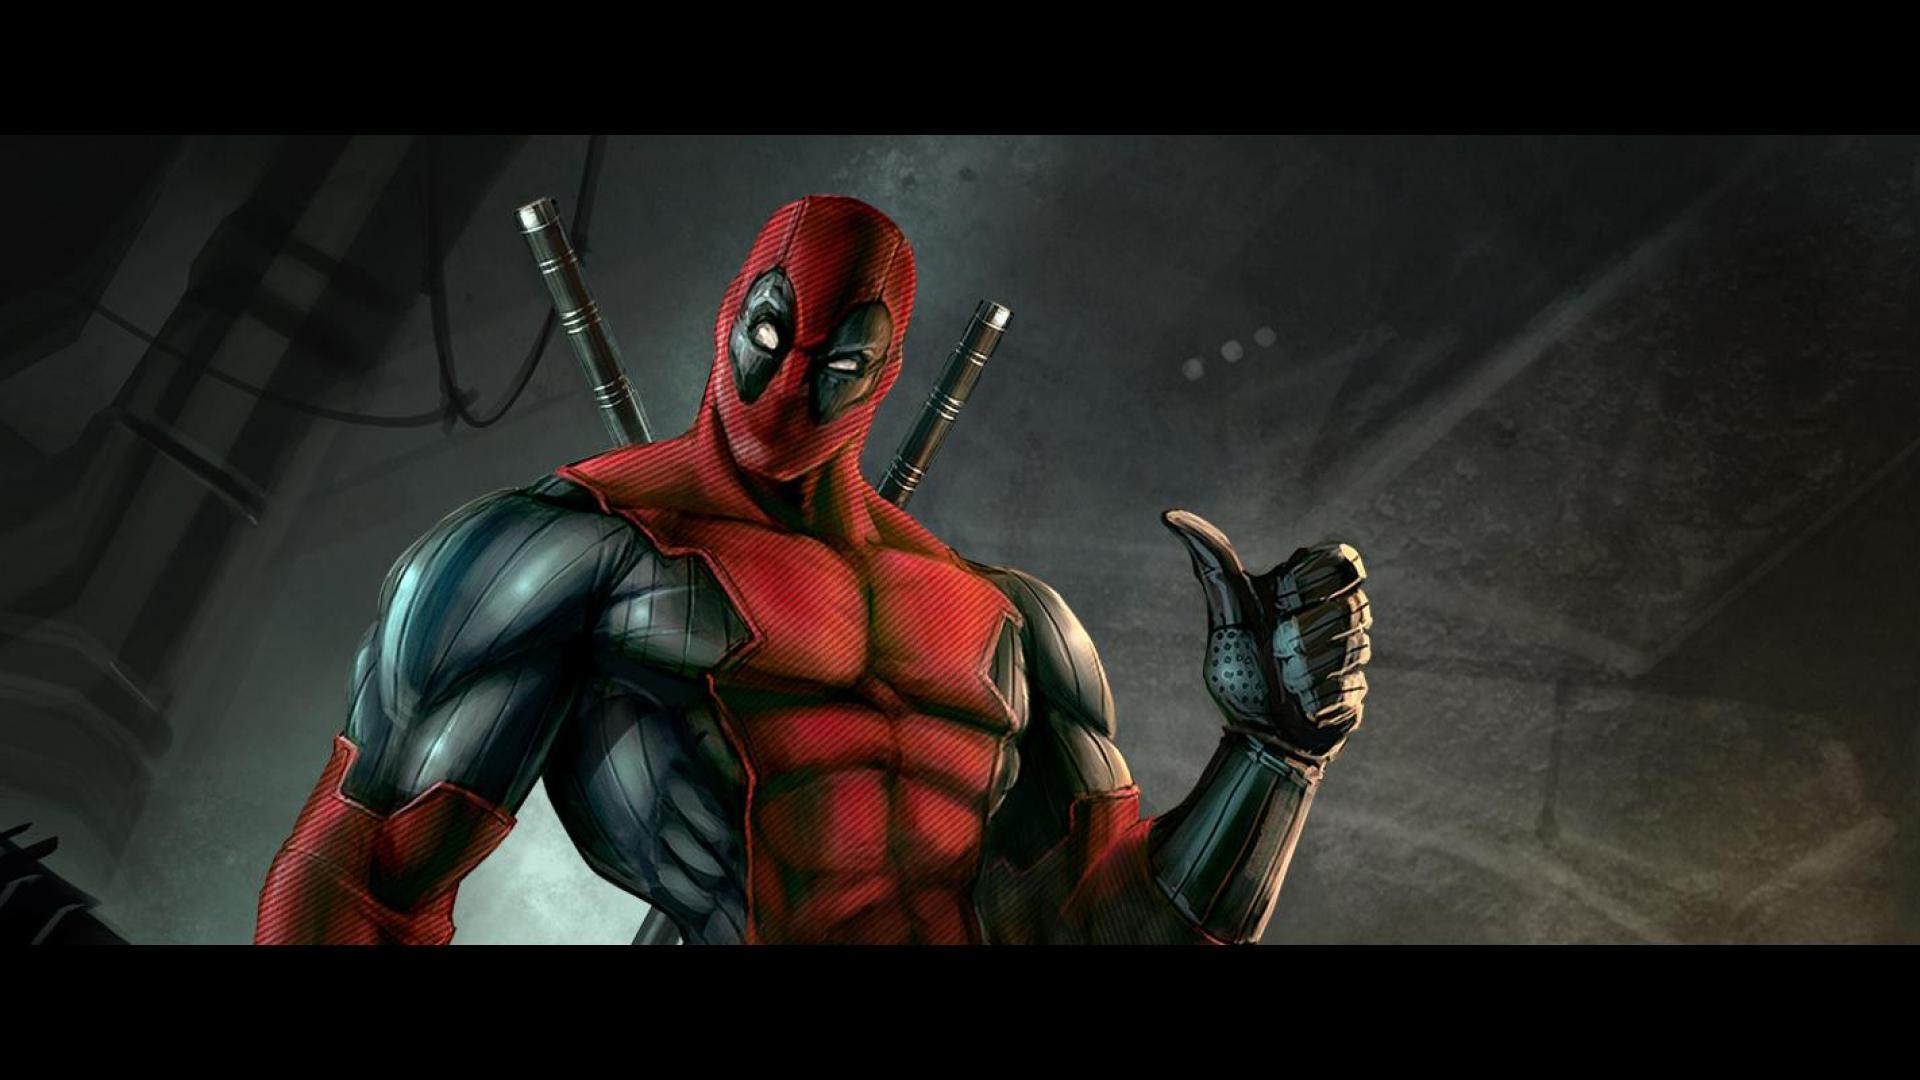 thumbs up wallpaper,fictional character,superhero,cg artwork,screenshot